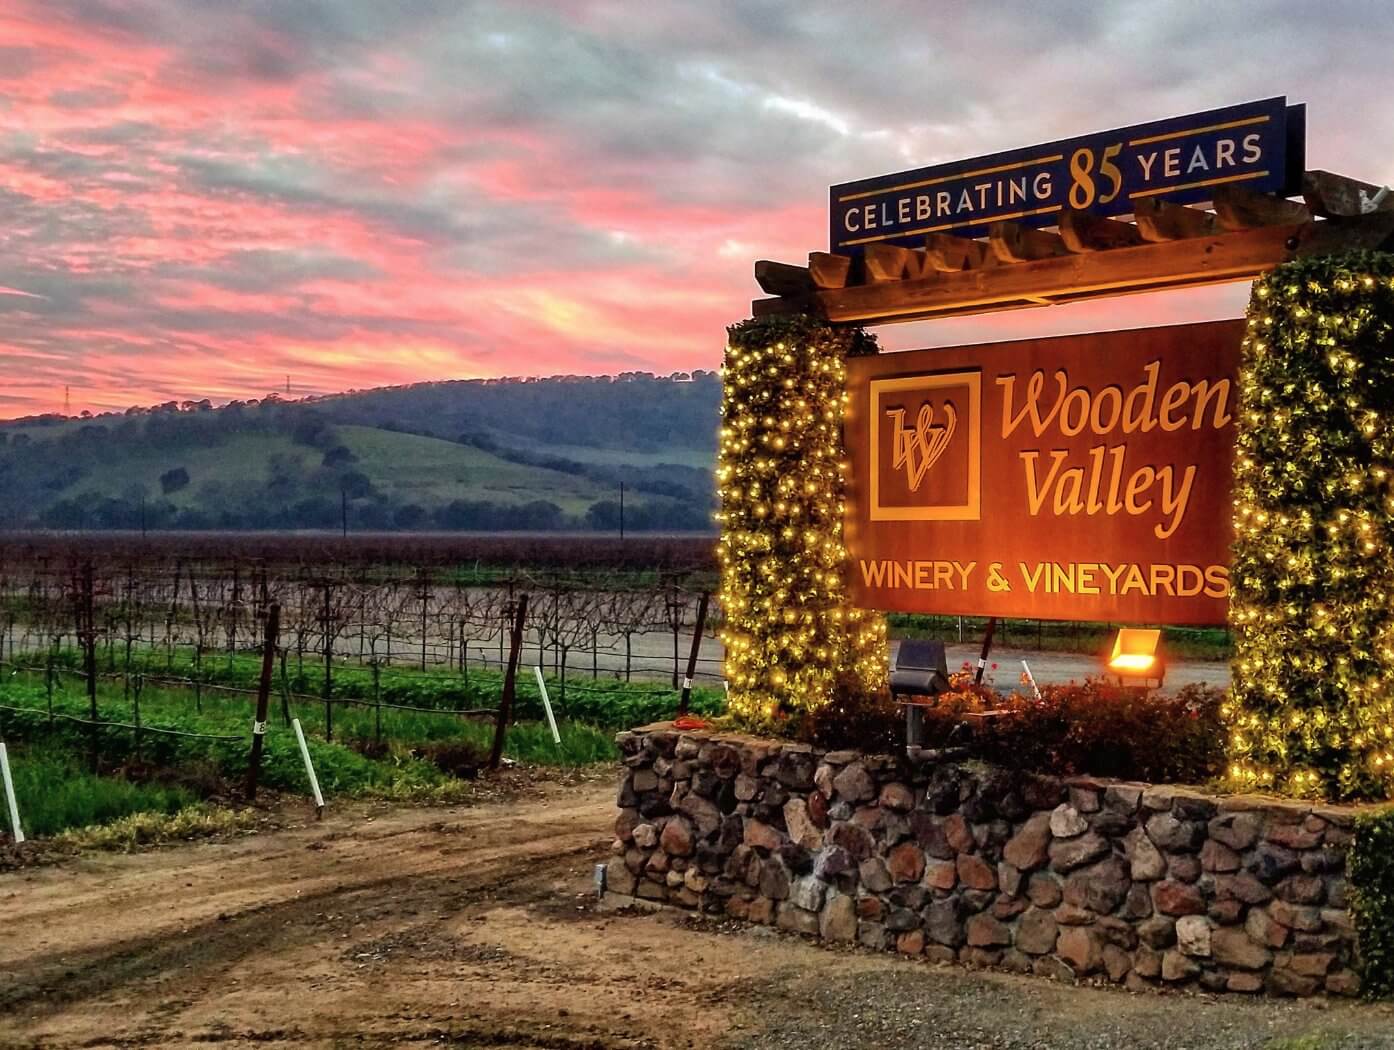 Wooden Valley Winery - Suisun Valley Winery in Fairfield, CA